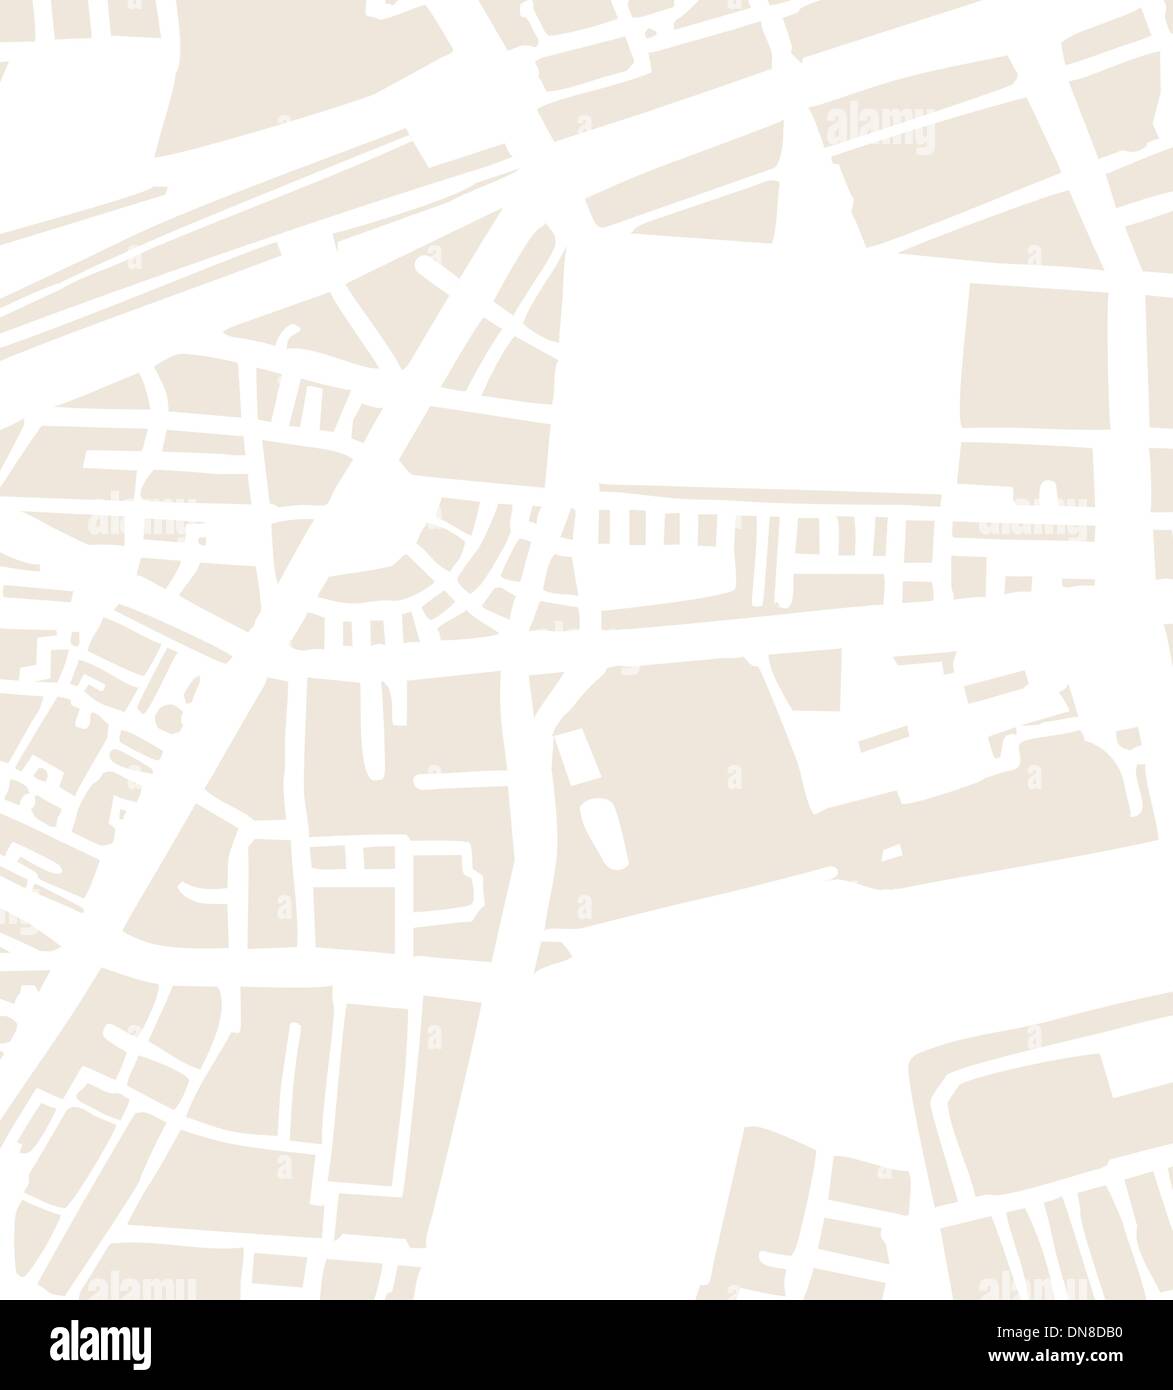 Abstract city map vector illustration avec des rues, des parcs et de l'étang Illustration de Vecteur